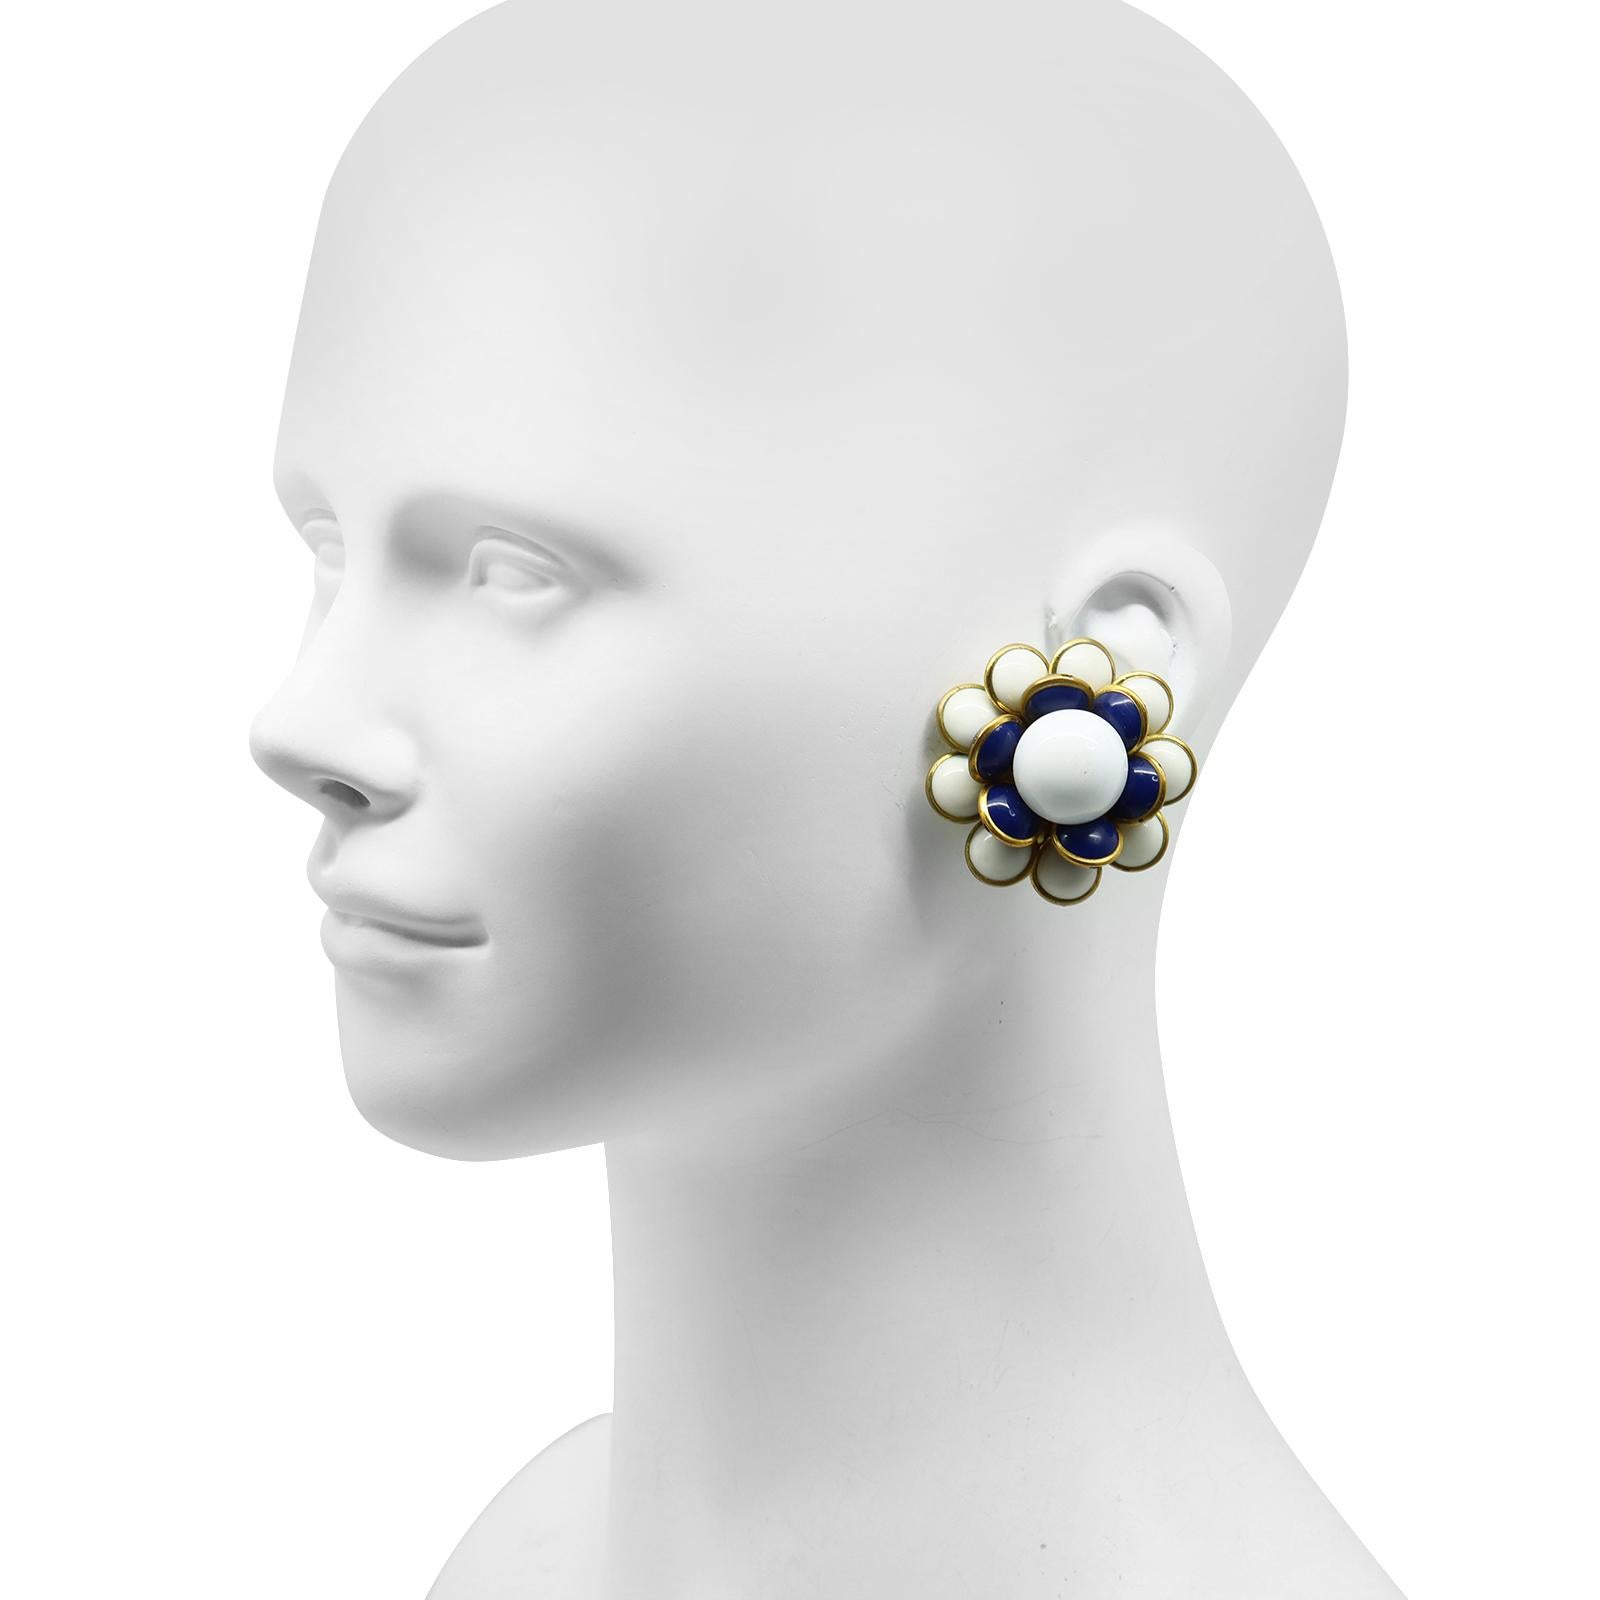 Artist Vintage Gripoix Navy, White and Gold Flower Earrings